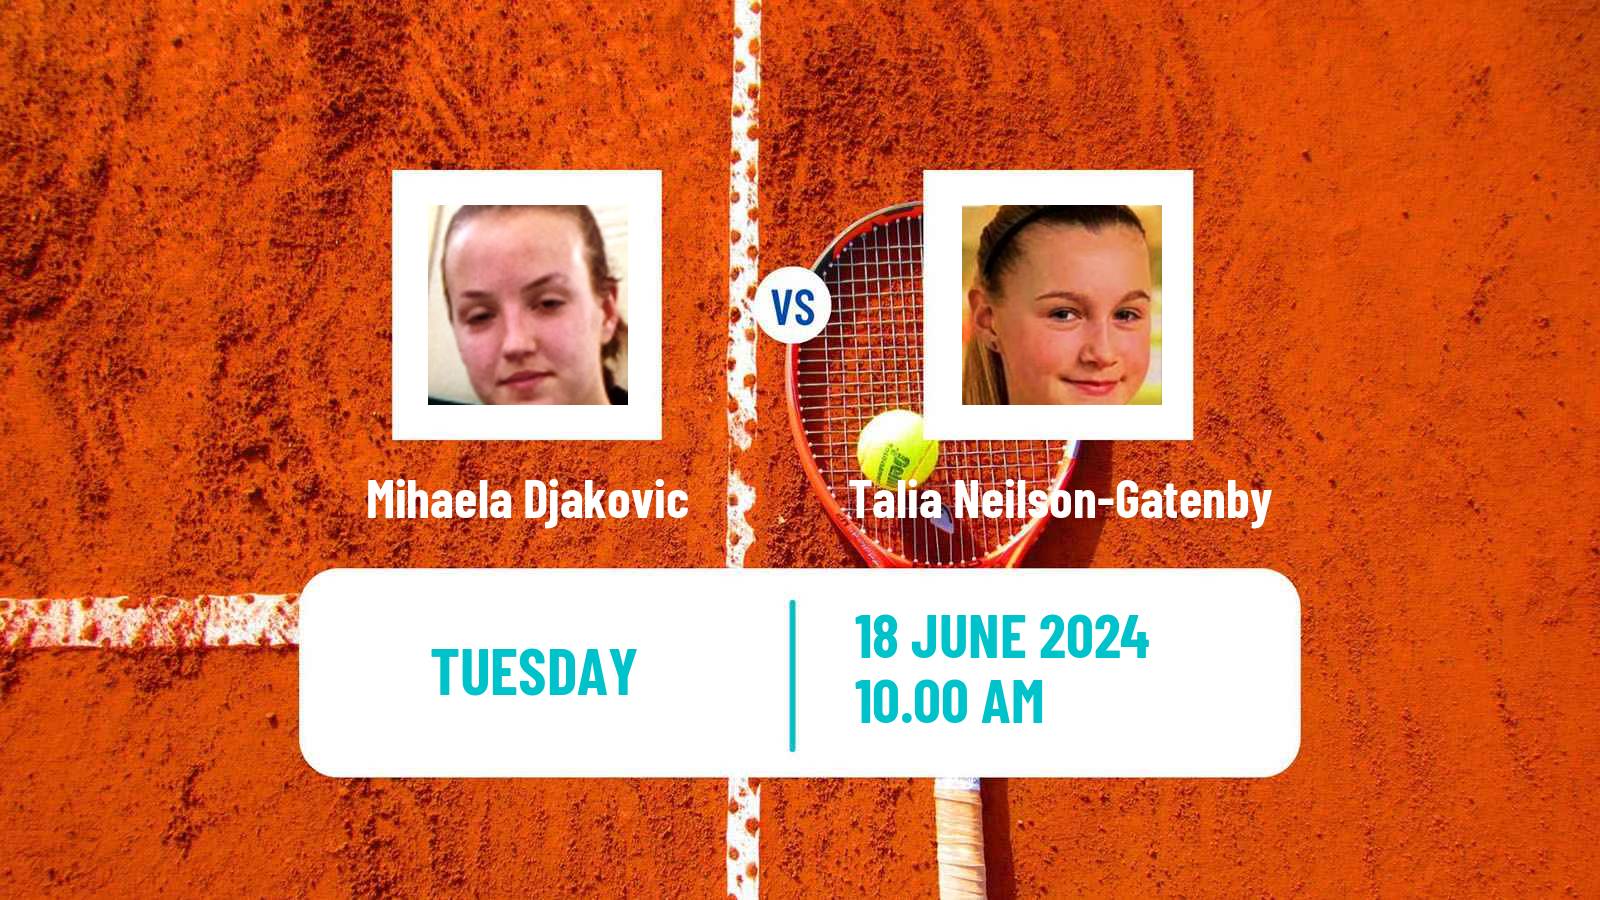 Tennis ITF W15 Monastir 23 Women Mihaela Djakovic - Talia Neilson-Gatenby